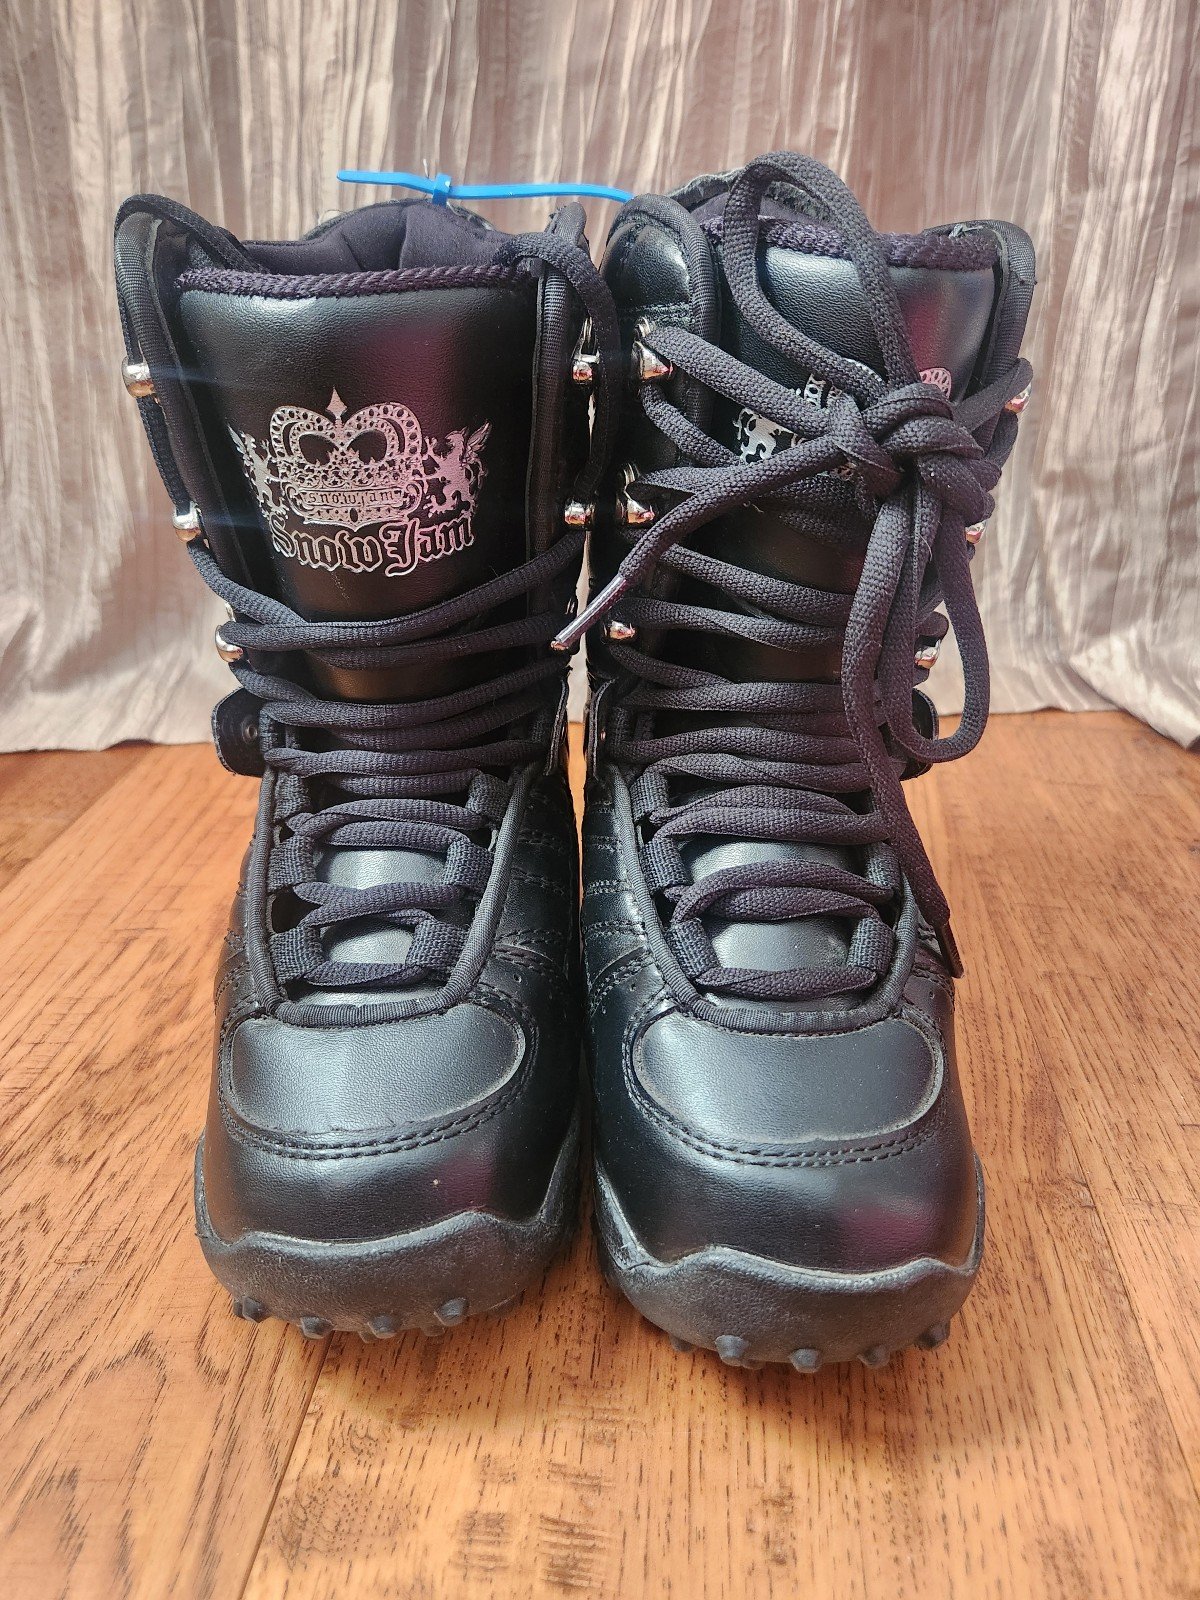 SNOWJAM snowboard boots - Youth size 1 d4bm2vslj